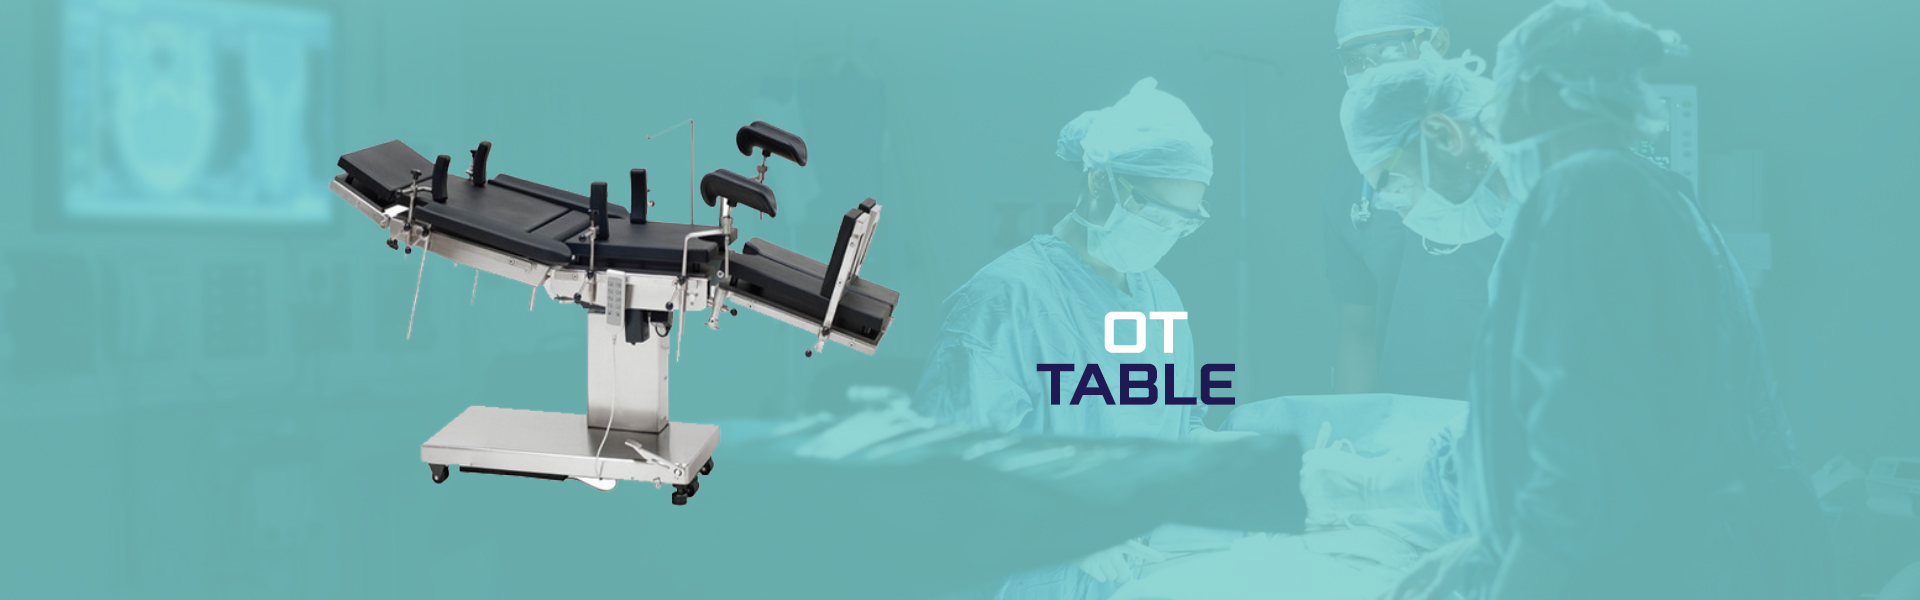 Innovation Surgical Company - OT Table & OT Light Manufacturer